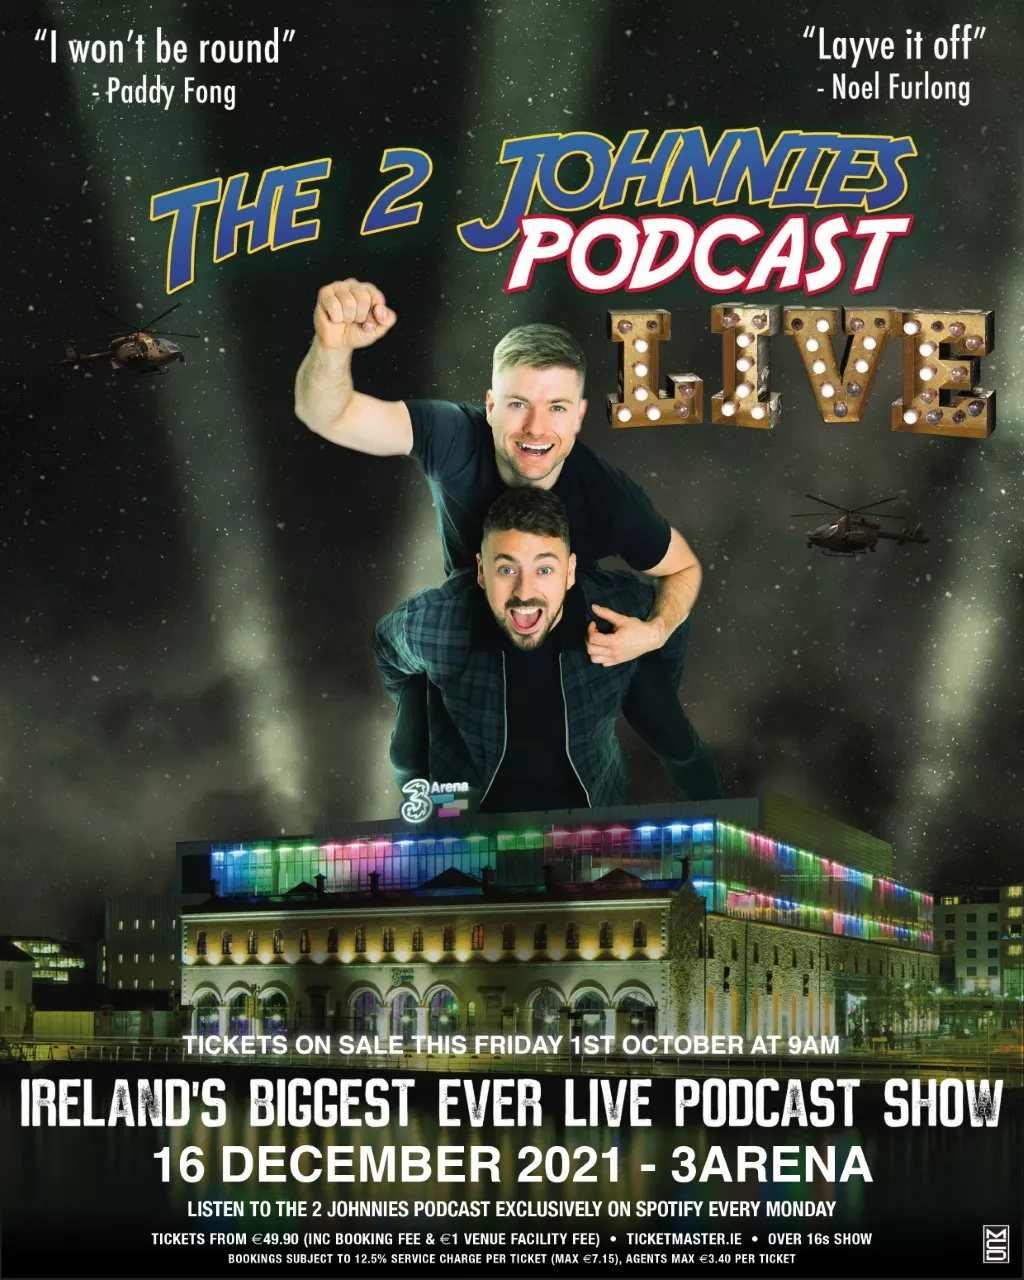 live podcast 3 arena